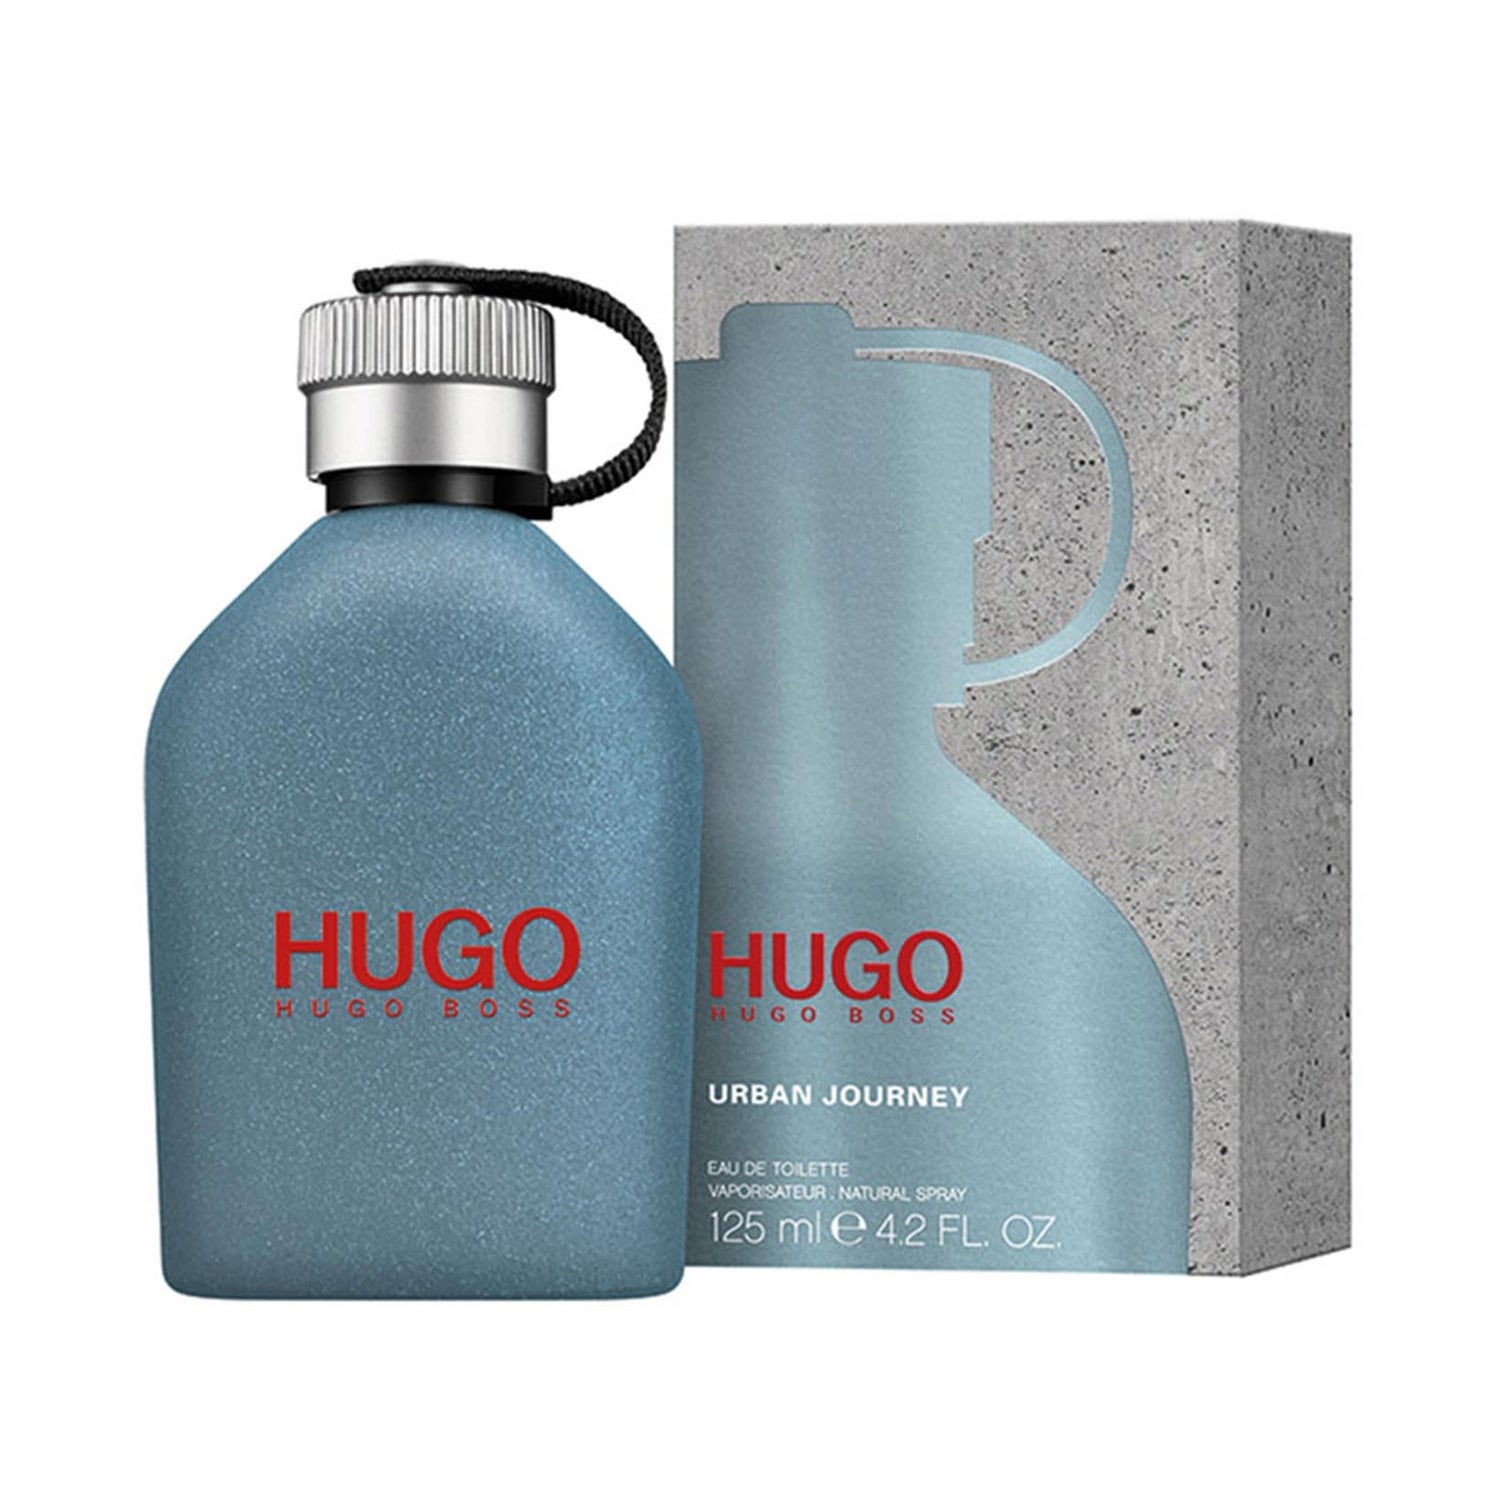 hugo boss man 125ml price